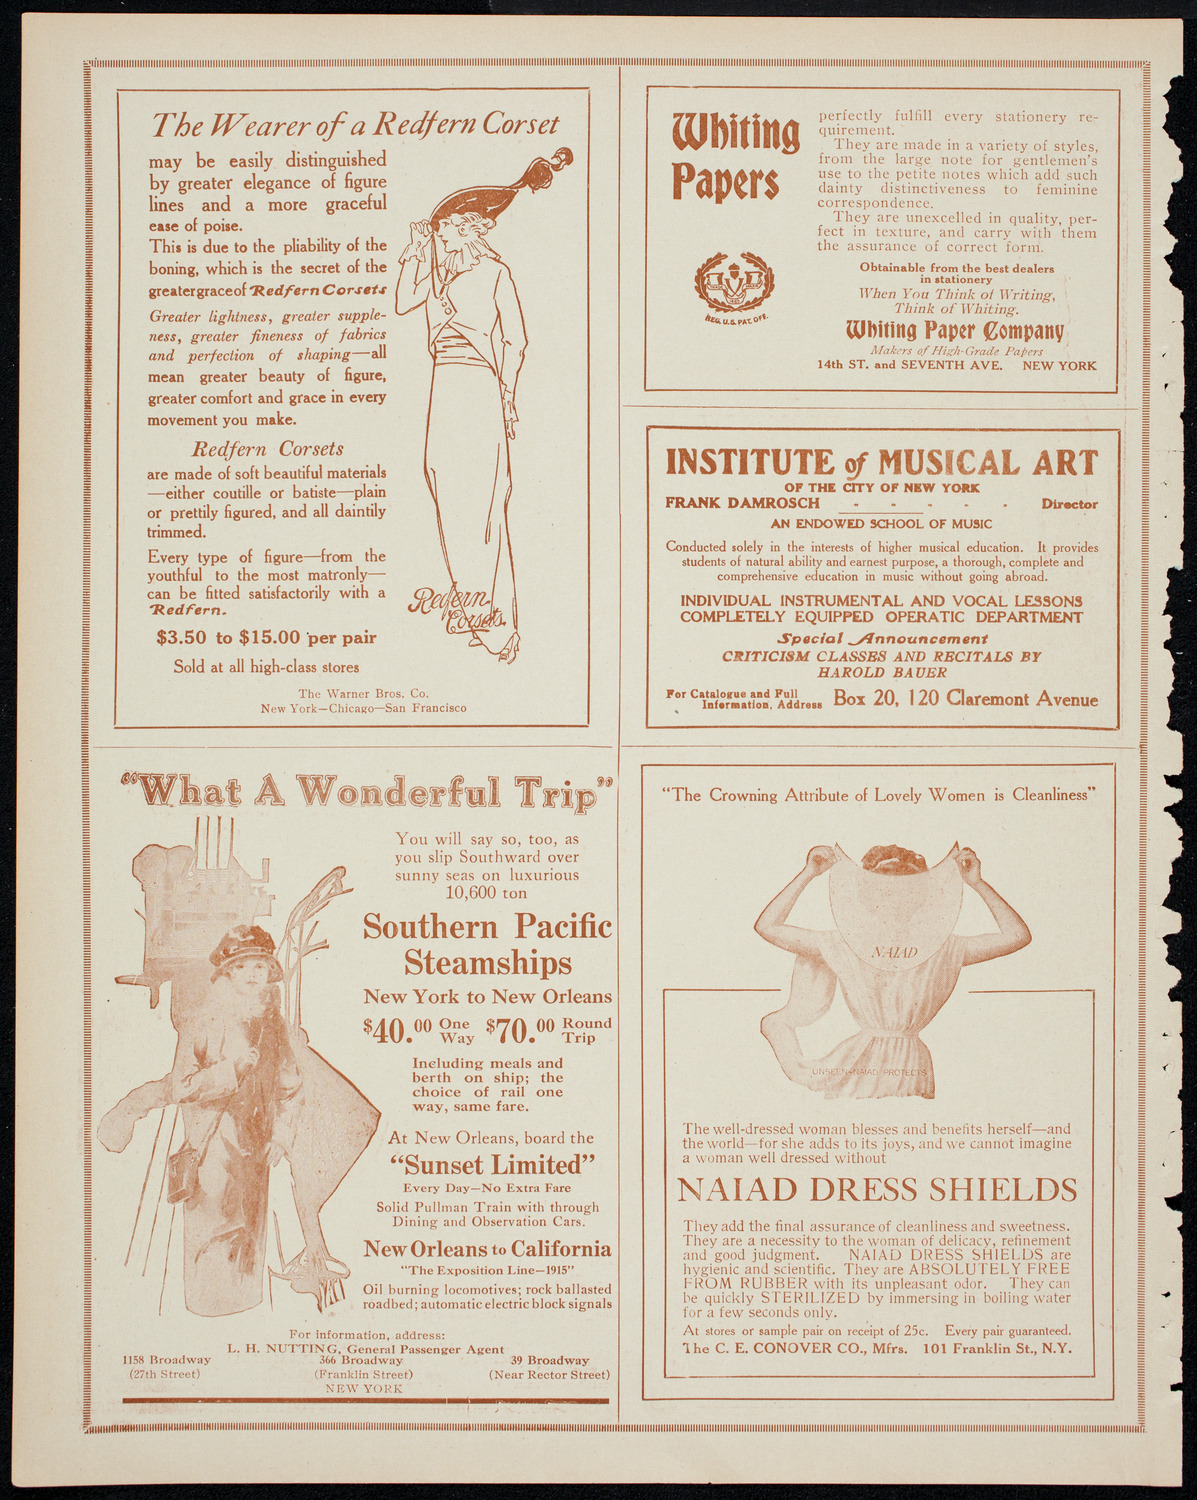 Benefit: New York Red Cross Hospital, February 27, 1914, program page 2